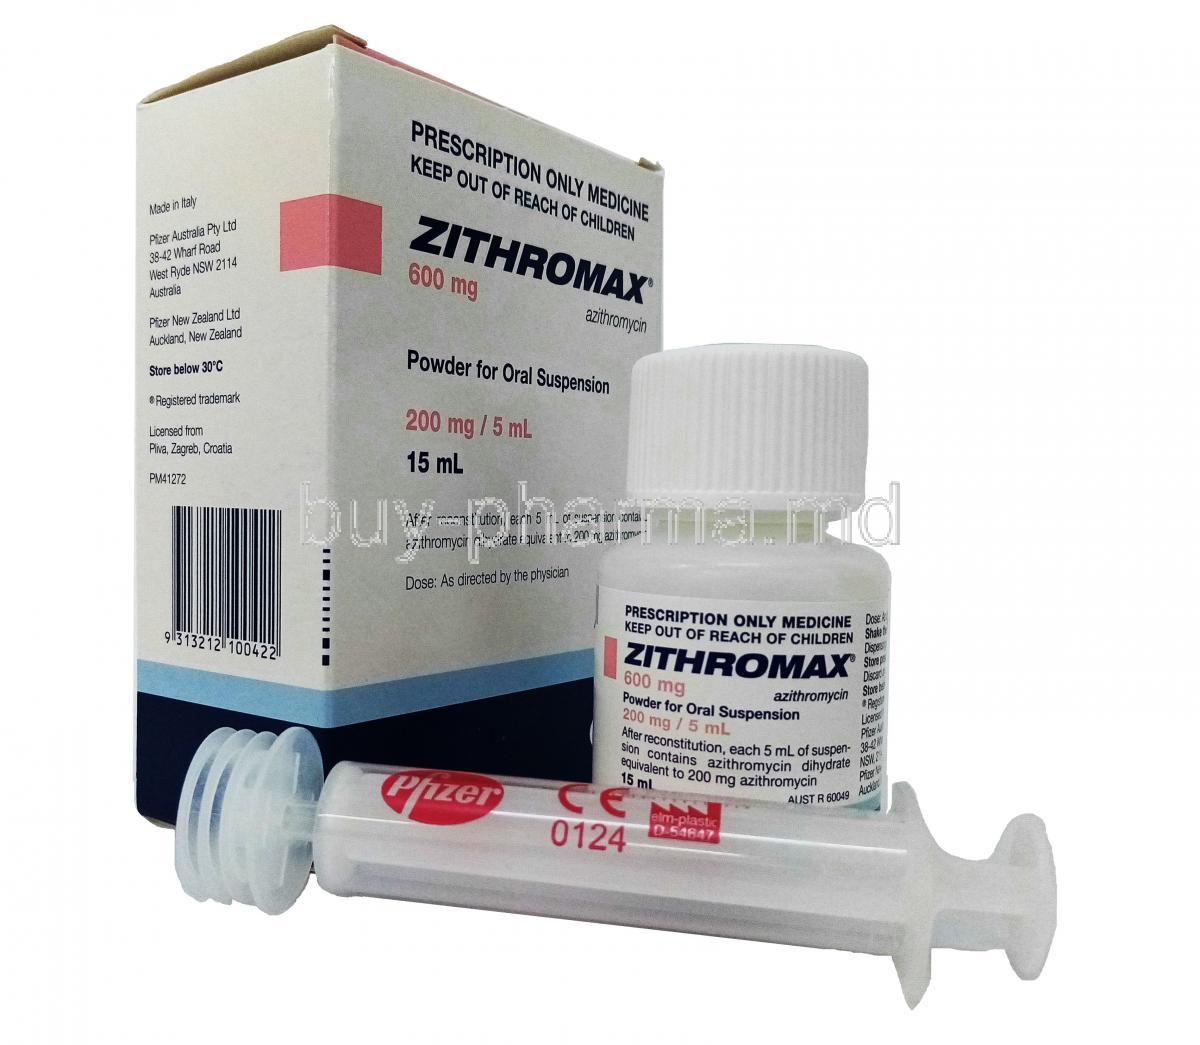 Zithromax Powder for oral suspension, Azithromycin, 200mg/5ml 15ml Powder for oral suspension, Box, Bottle, syringe